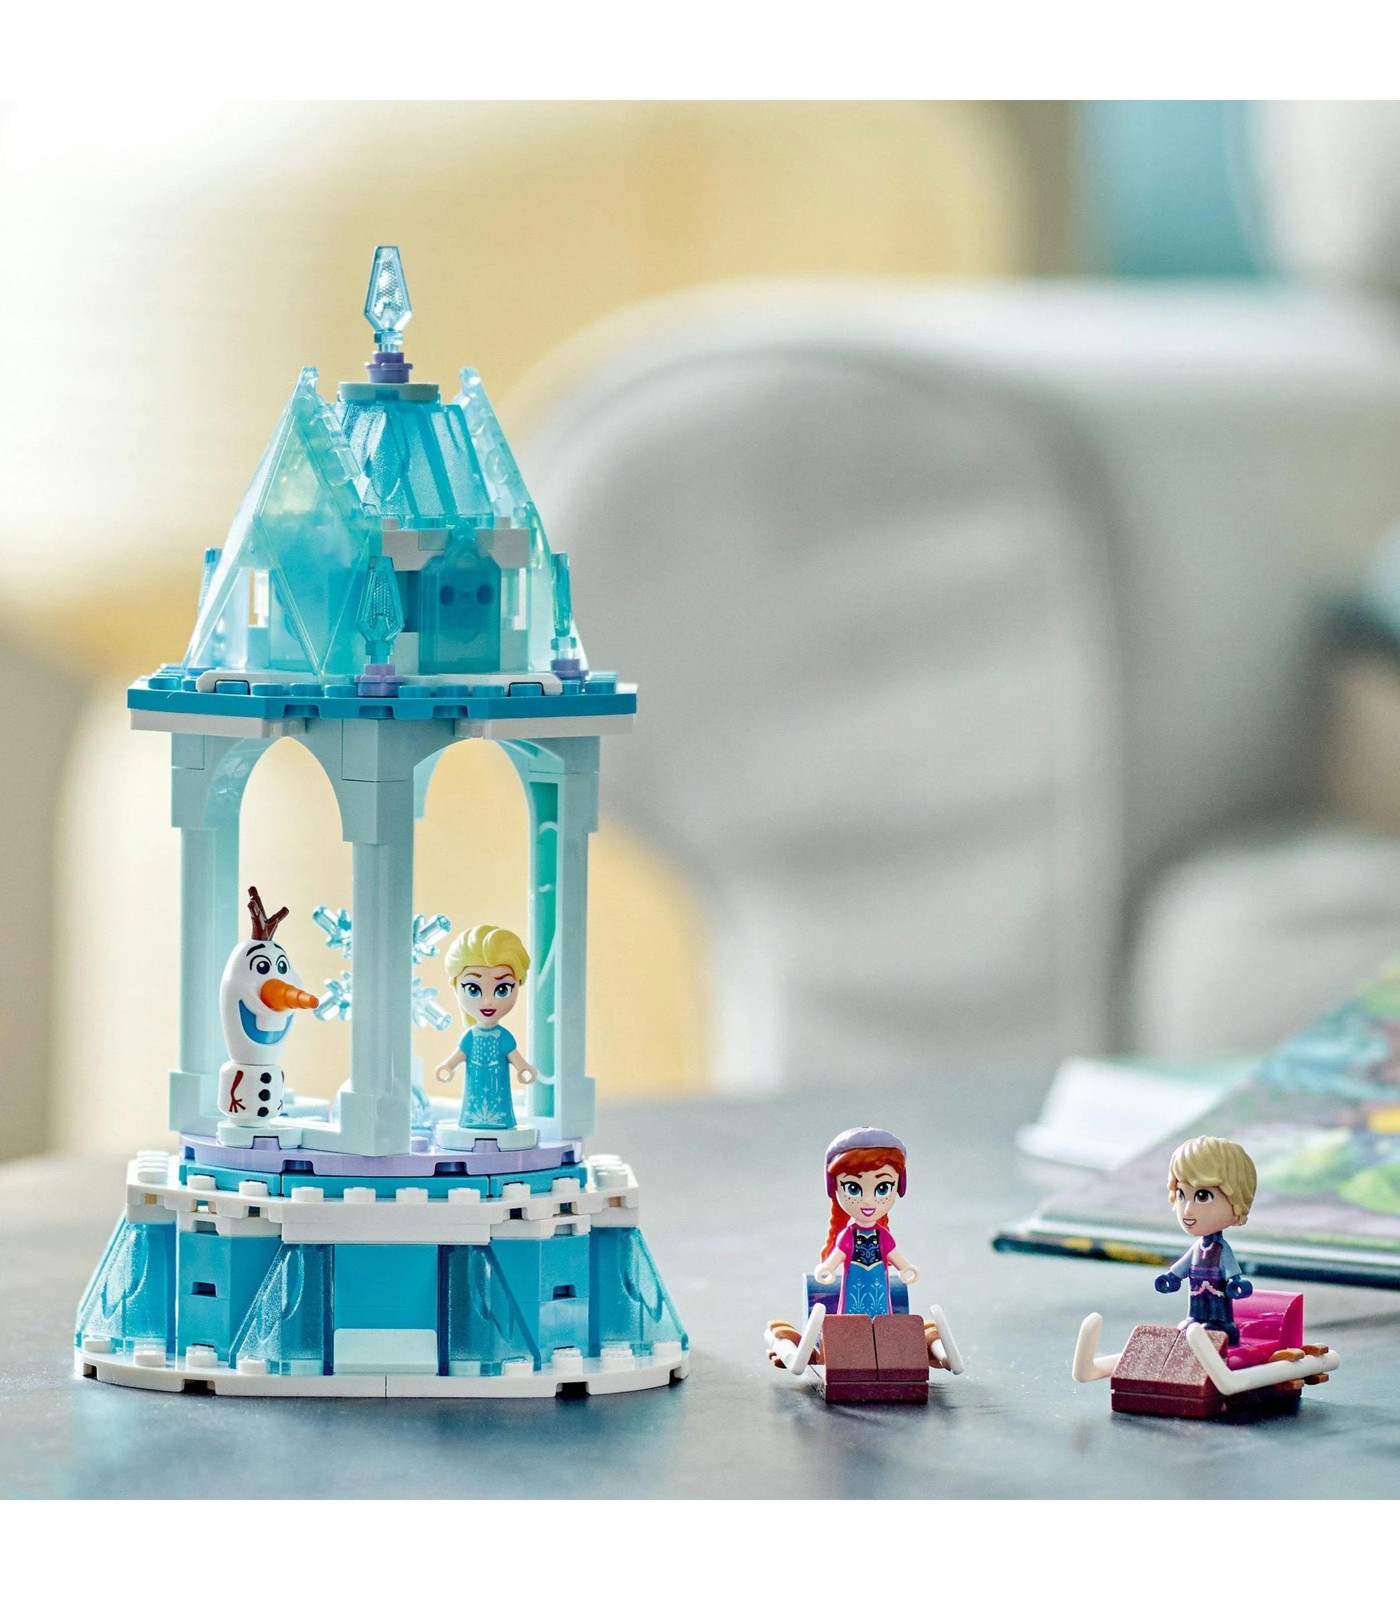 LEGO Disney Frozen 43218 Anna and Elsa's Merry-Go-Round Set